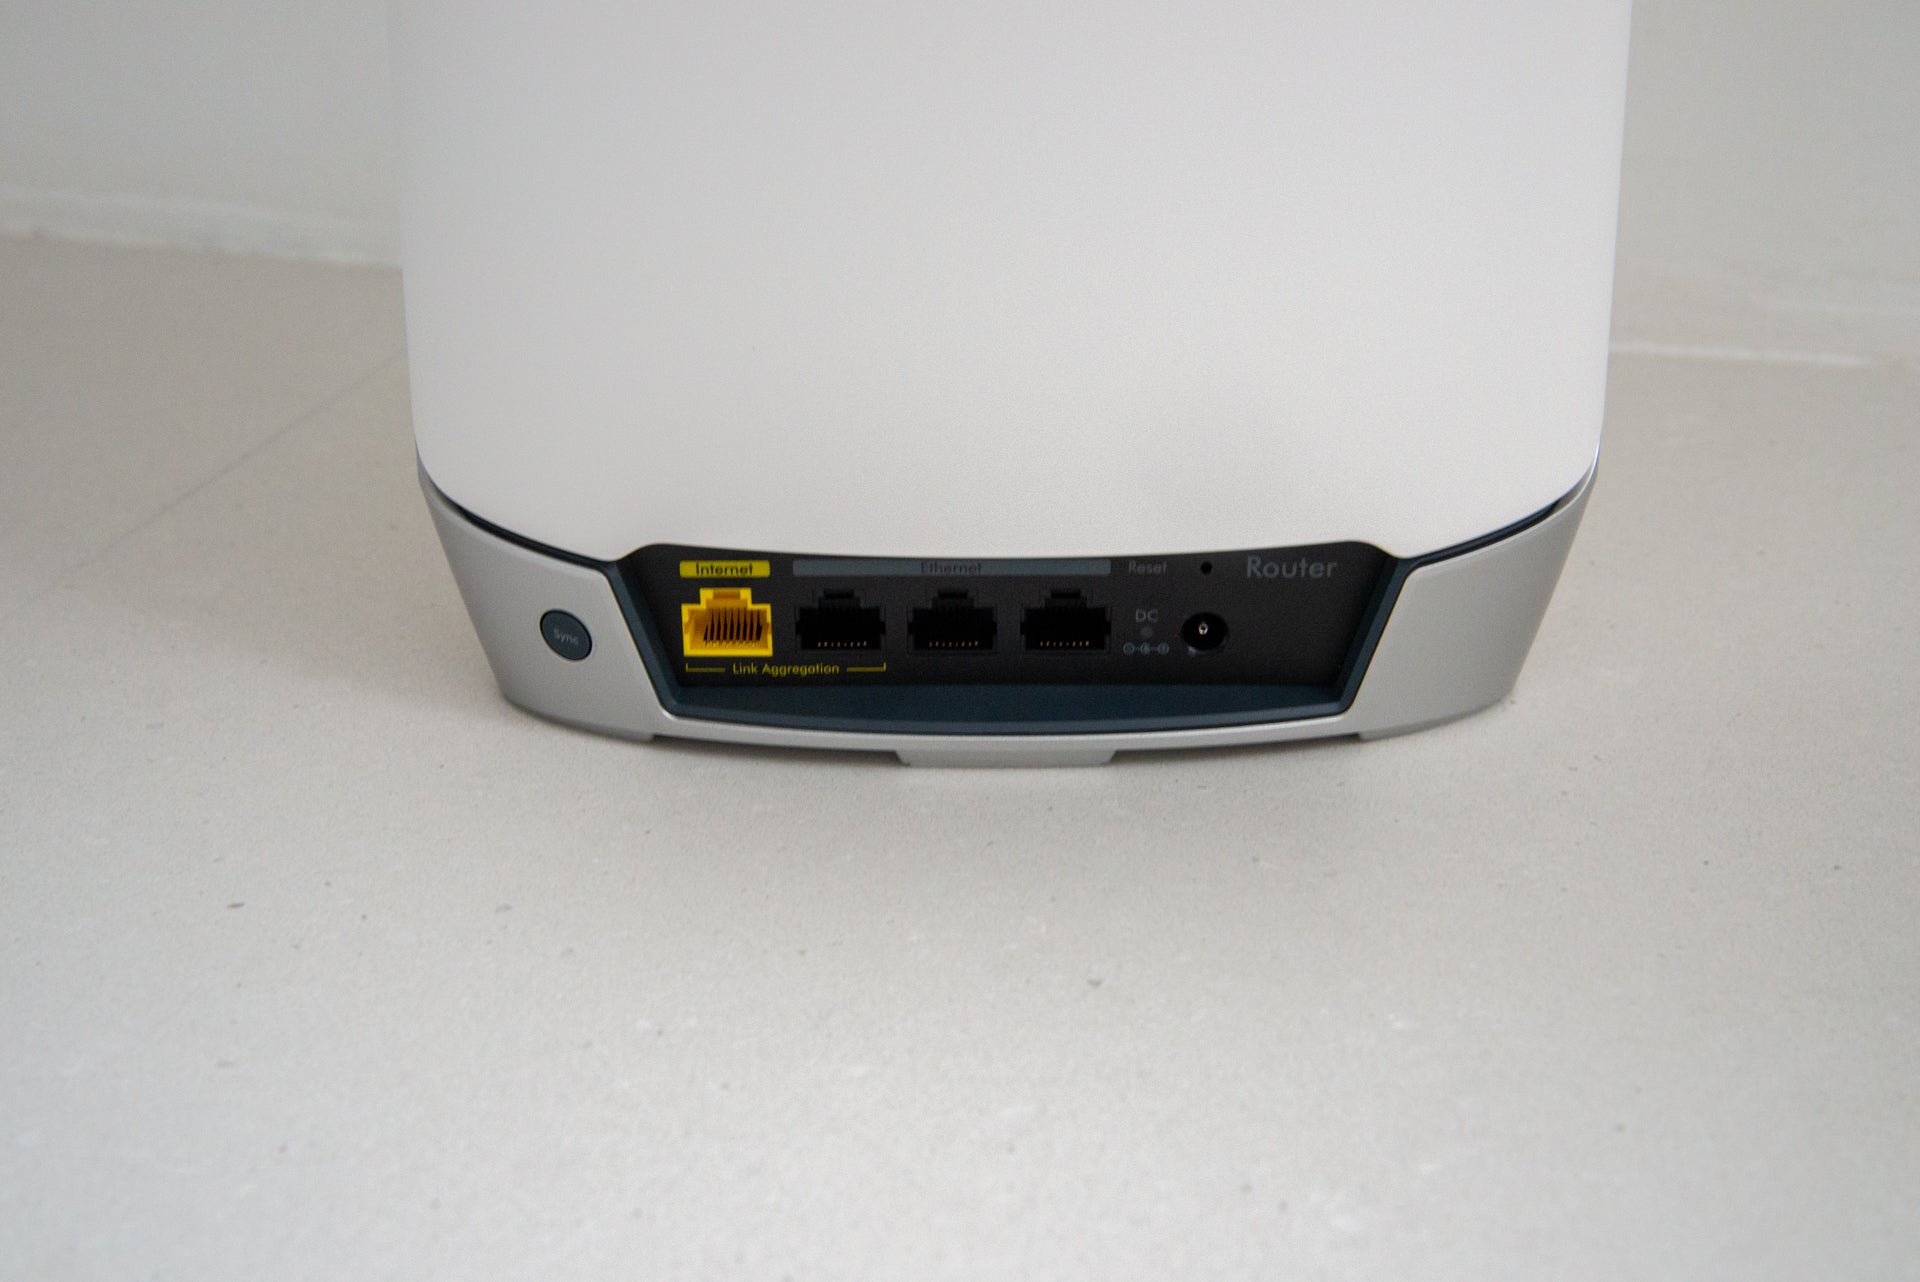 Netgear Orbi Wifi 6 System (RBK752) router ports